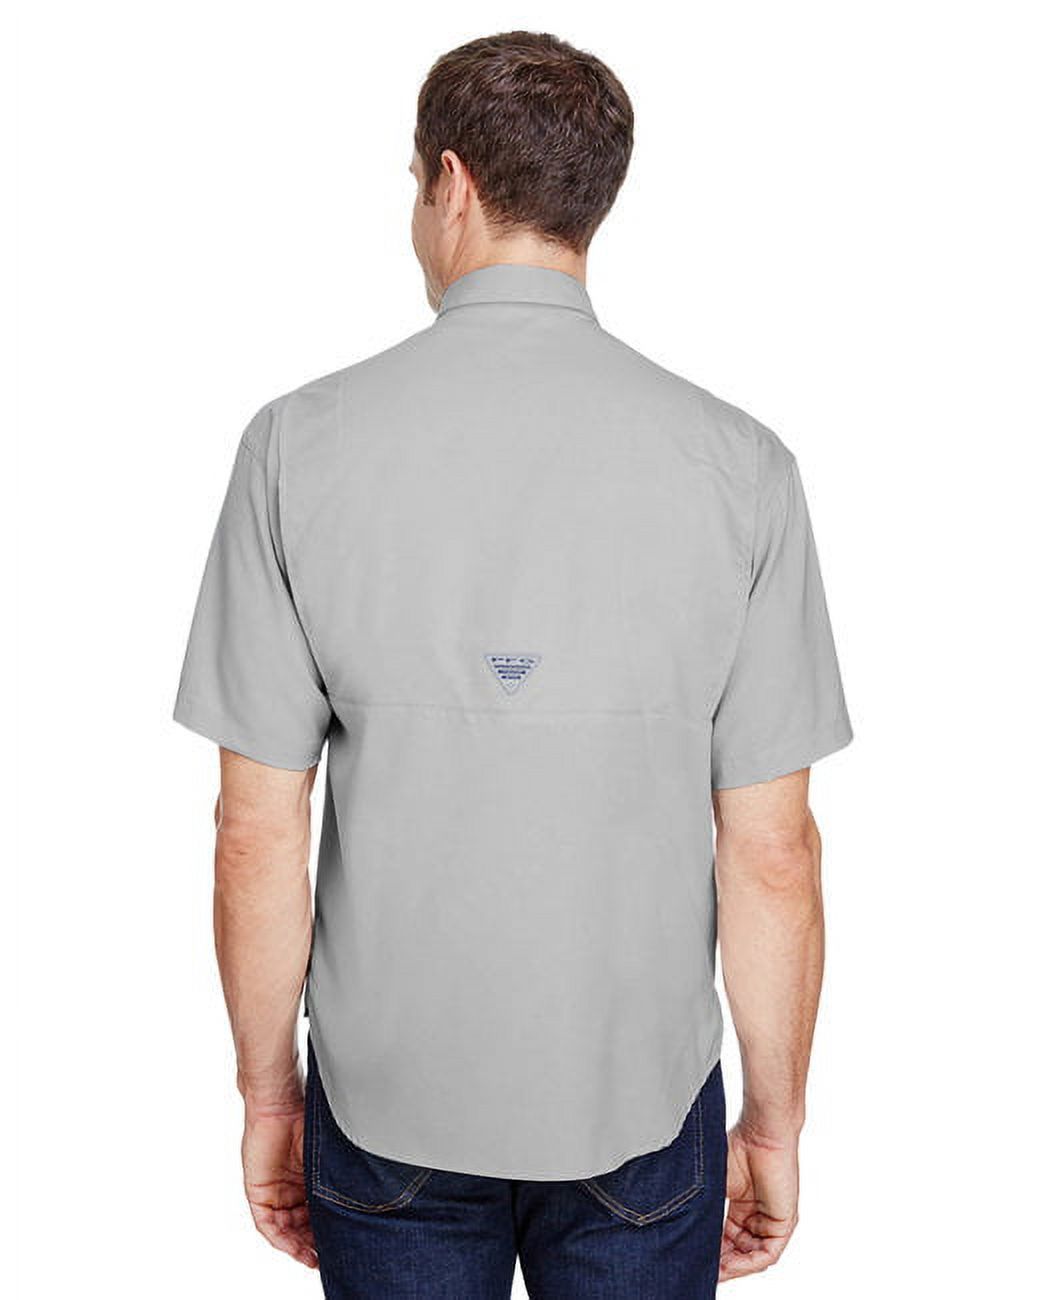 Columbia Men's Tamiami II SS Shirt - image 2 of 3